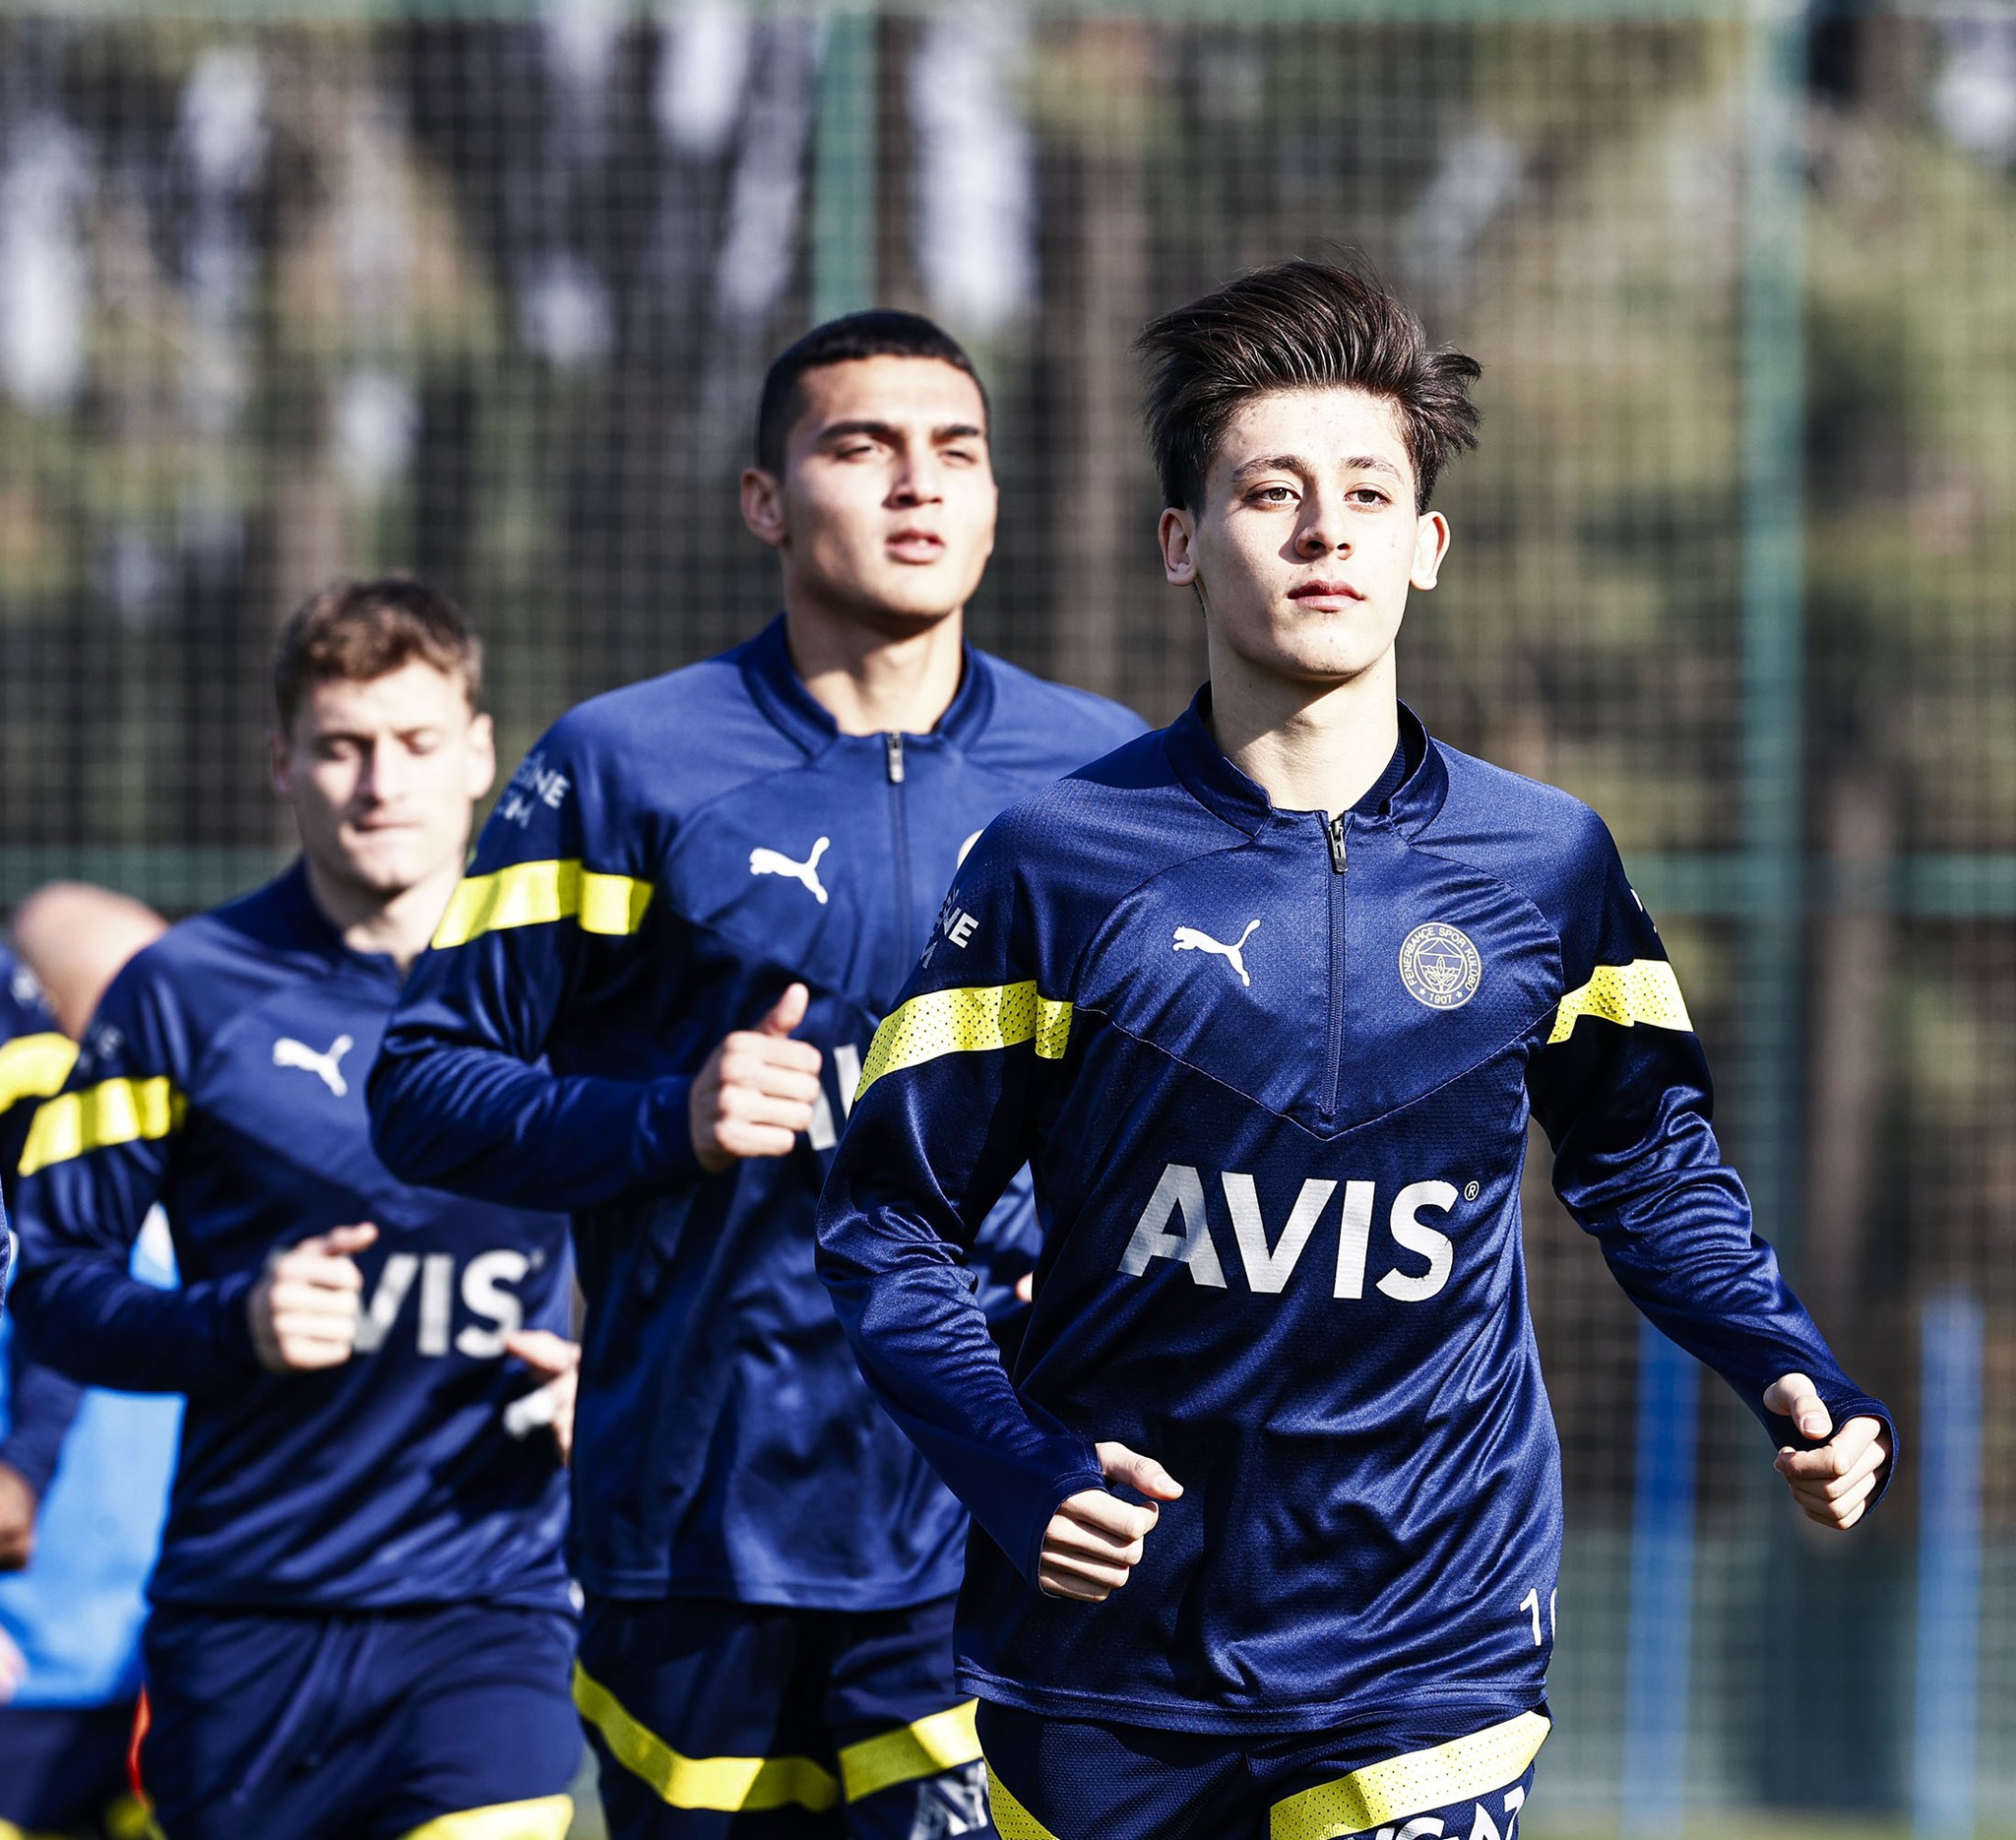 Jorge Jesus transfer raporunu verdi! Fenerbahçe’de 8 ayrılık...